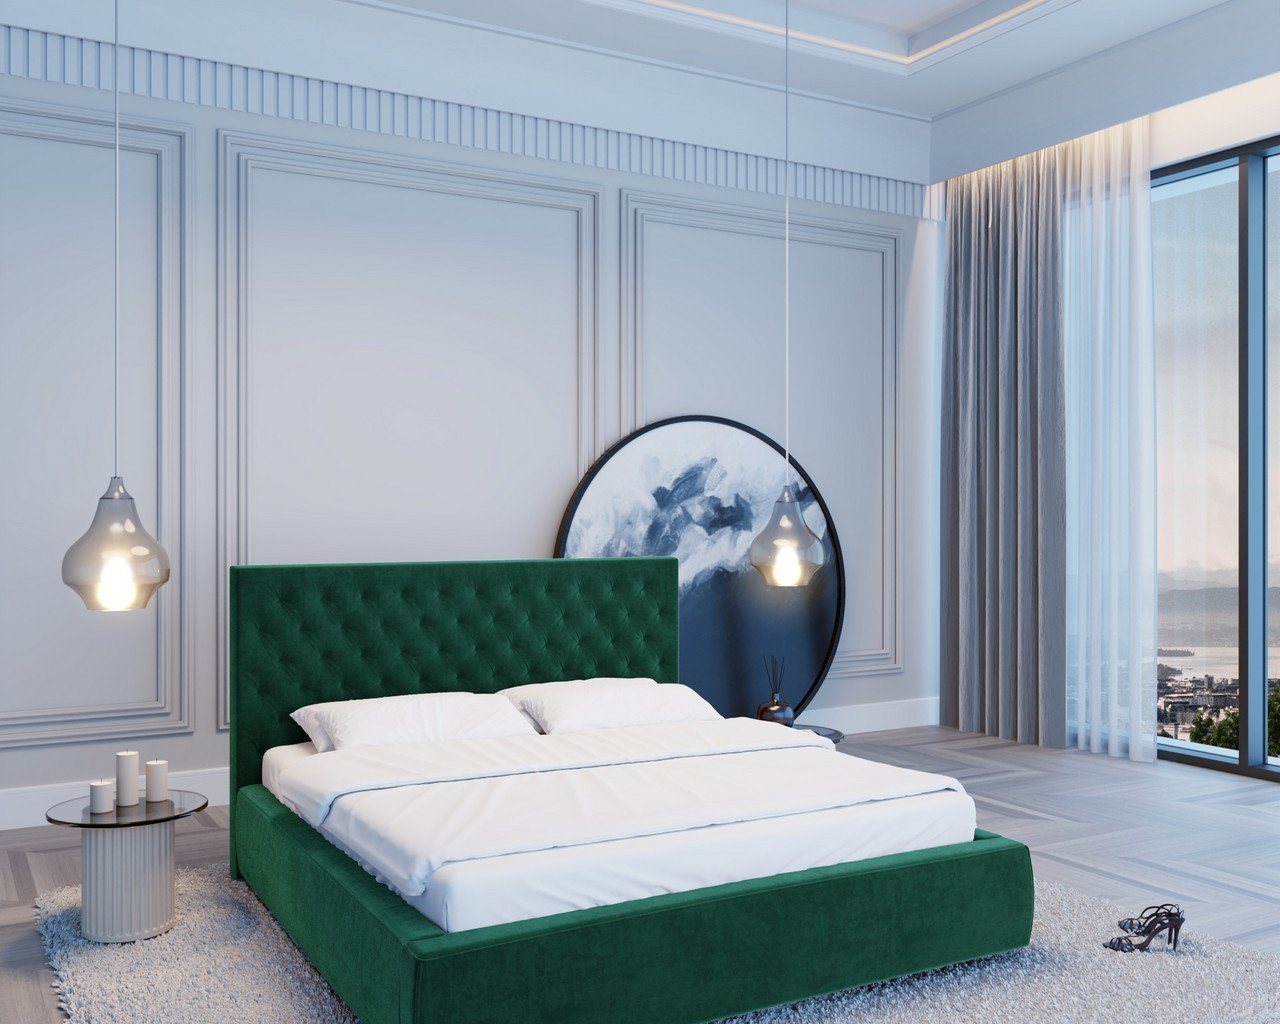 Sofa Dreams Polsterbett Olivos (Designerbett), Komplettbett Bett mit Bettkasten, inklusive Matratze und Topper von Sofa Dreams